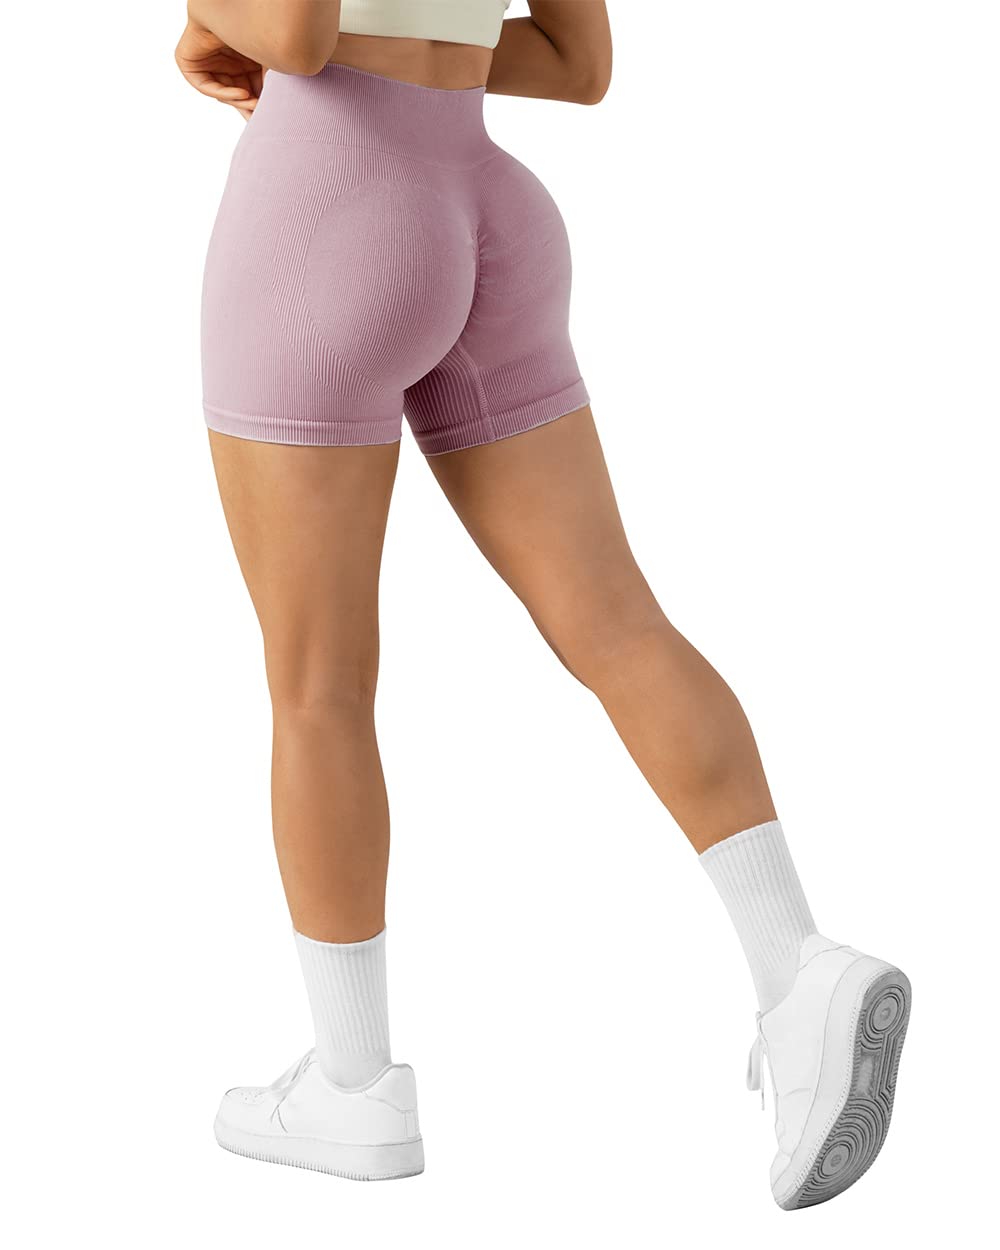 SUUKSESS Women Seamless Booty Shorts Scrunch Butt Lifting High Waisted Workout Shorts (3 Acid Wash Pink, S)